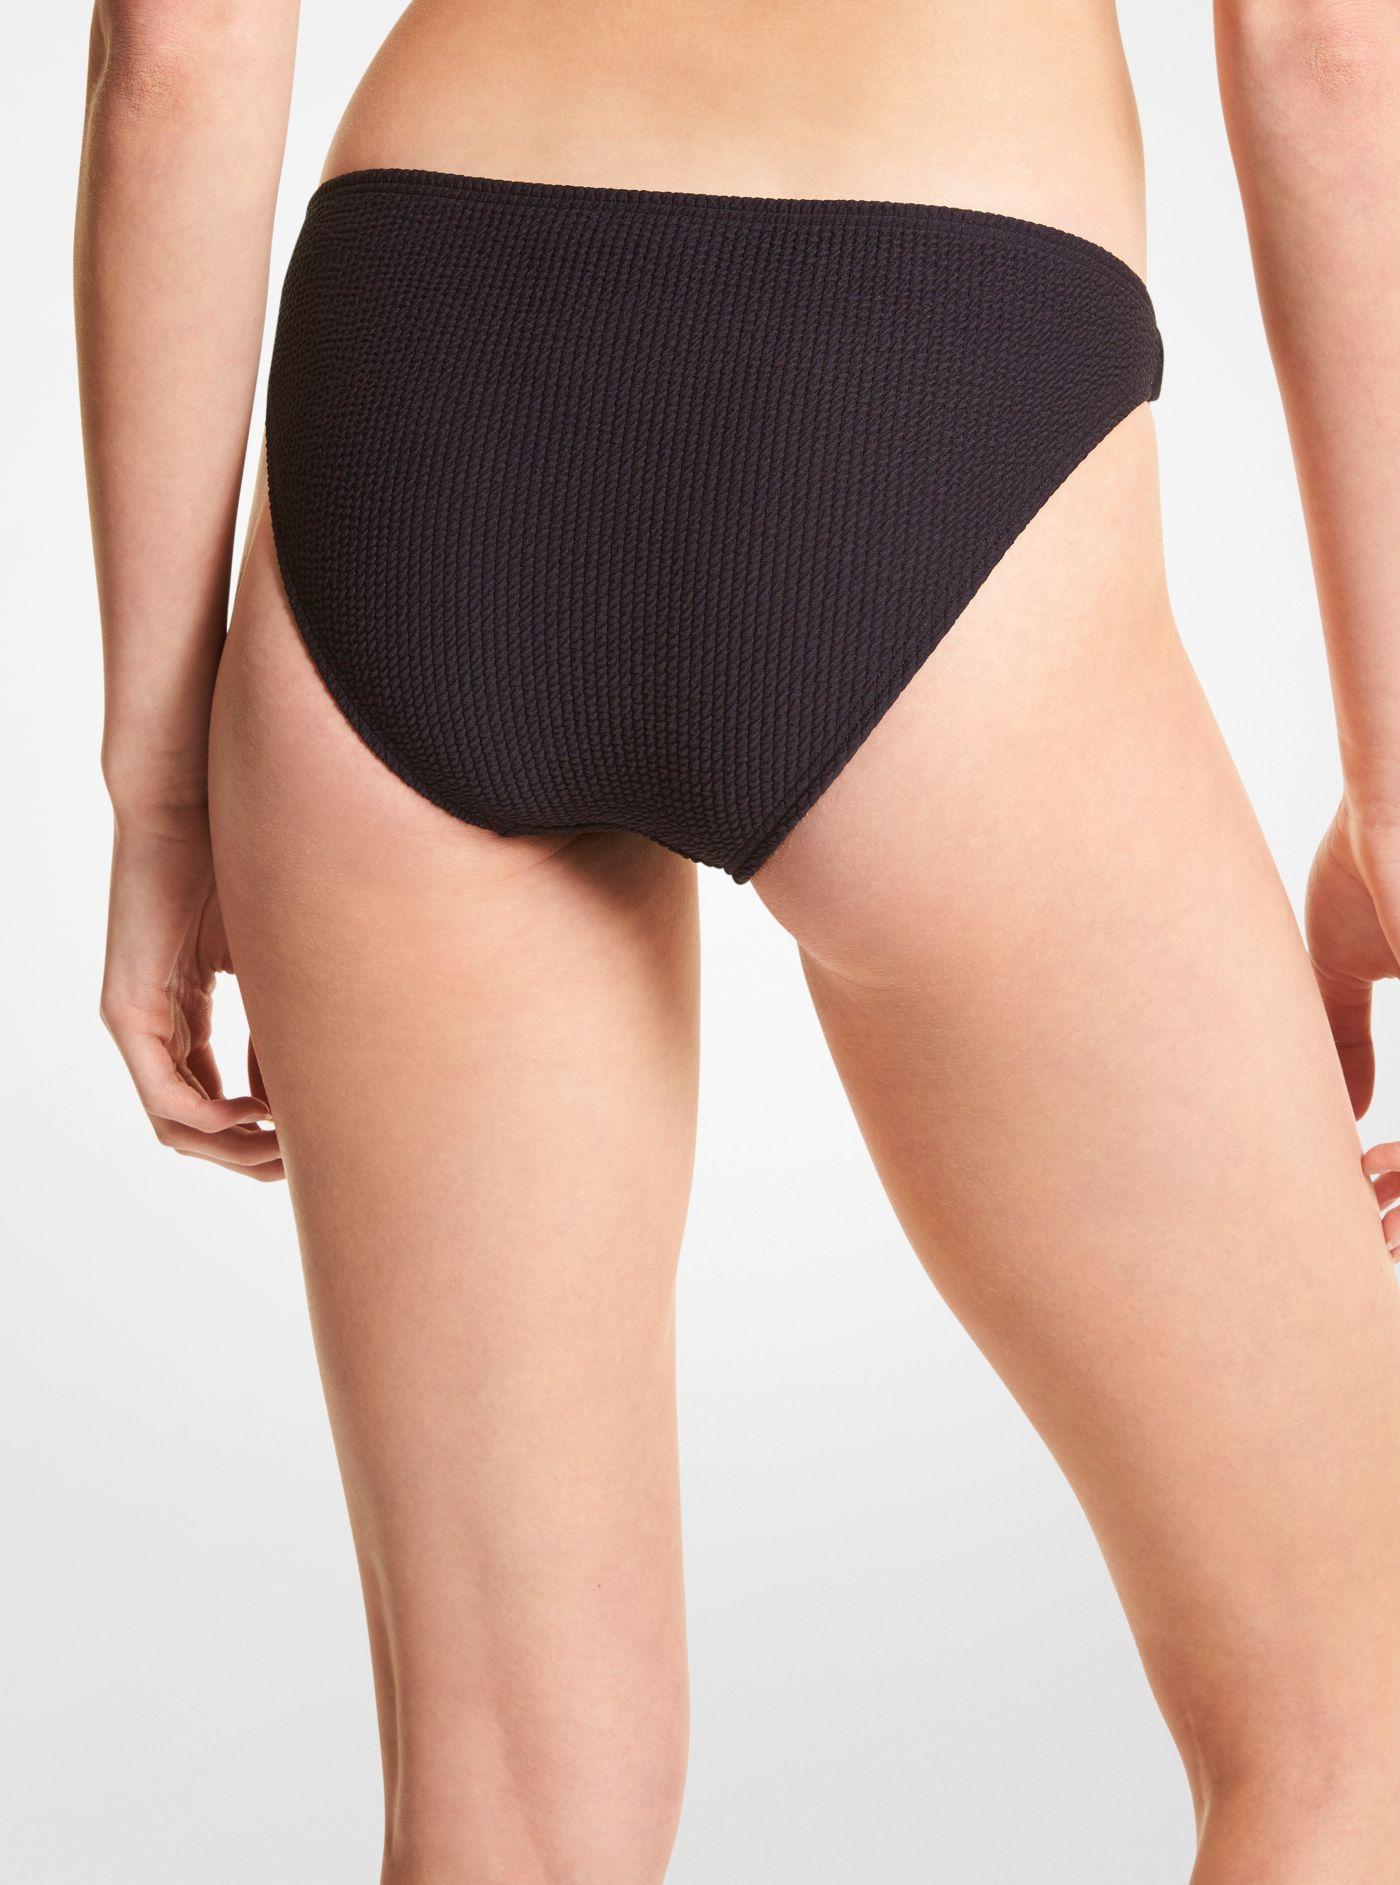 Michael Kors Textured Stretch Bikini Bottom in Black | Lyst